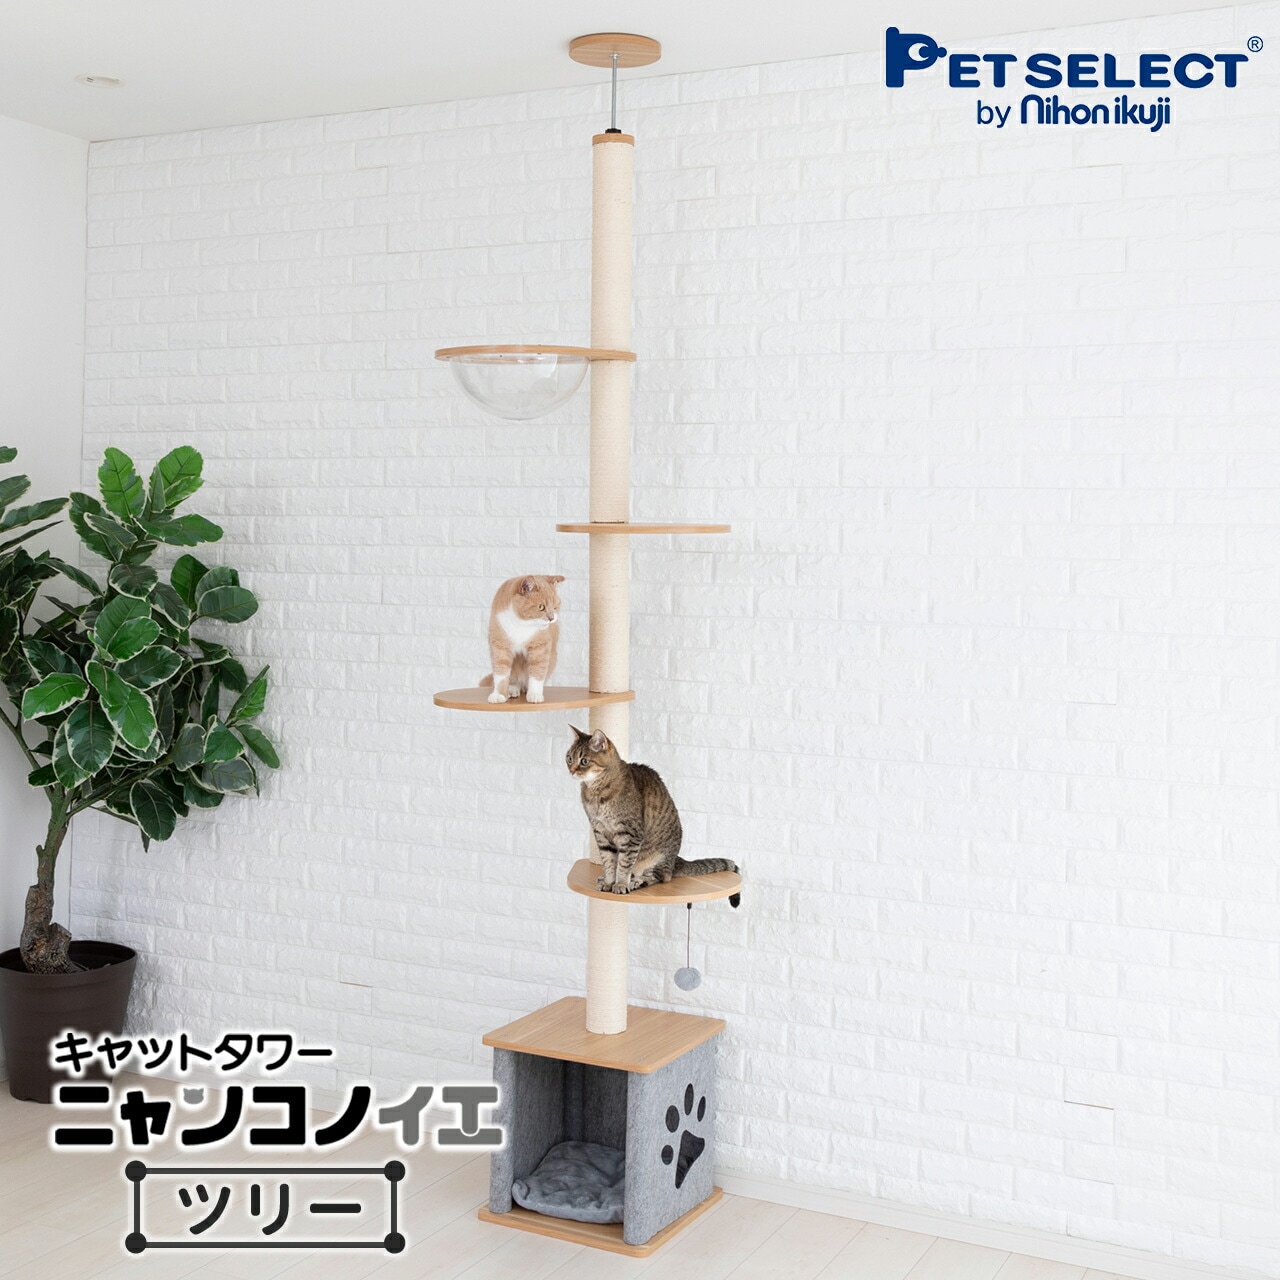 Petselect by Nihonikuji 公式オンラインショップペットセレクト 公式 